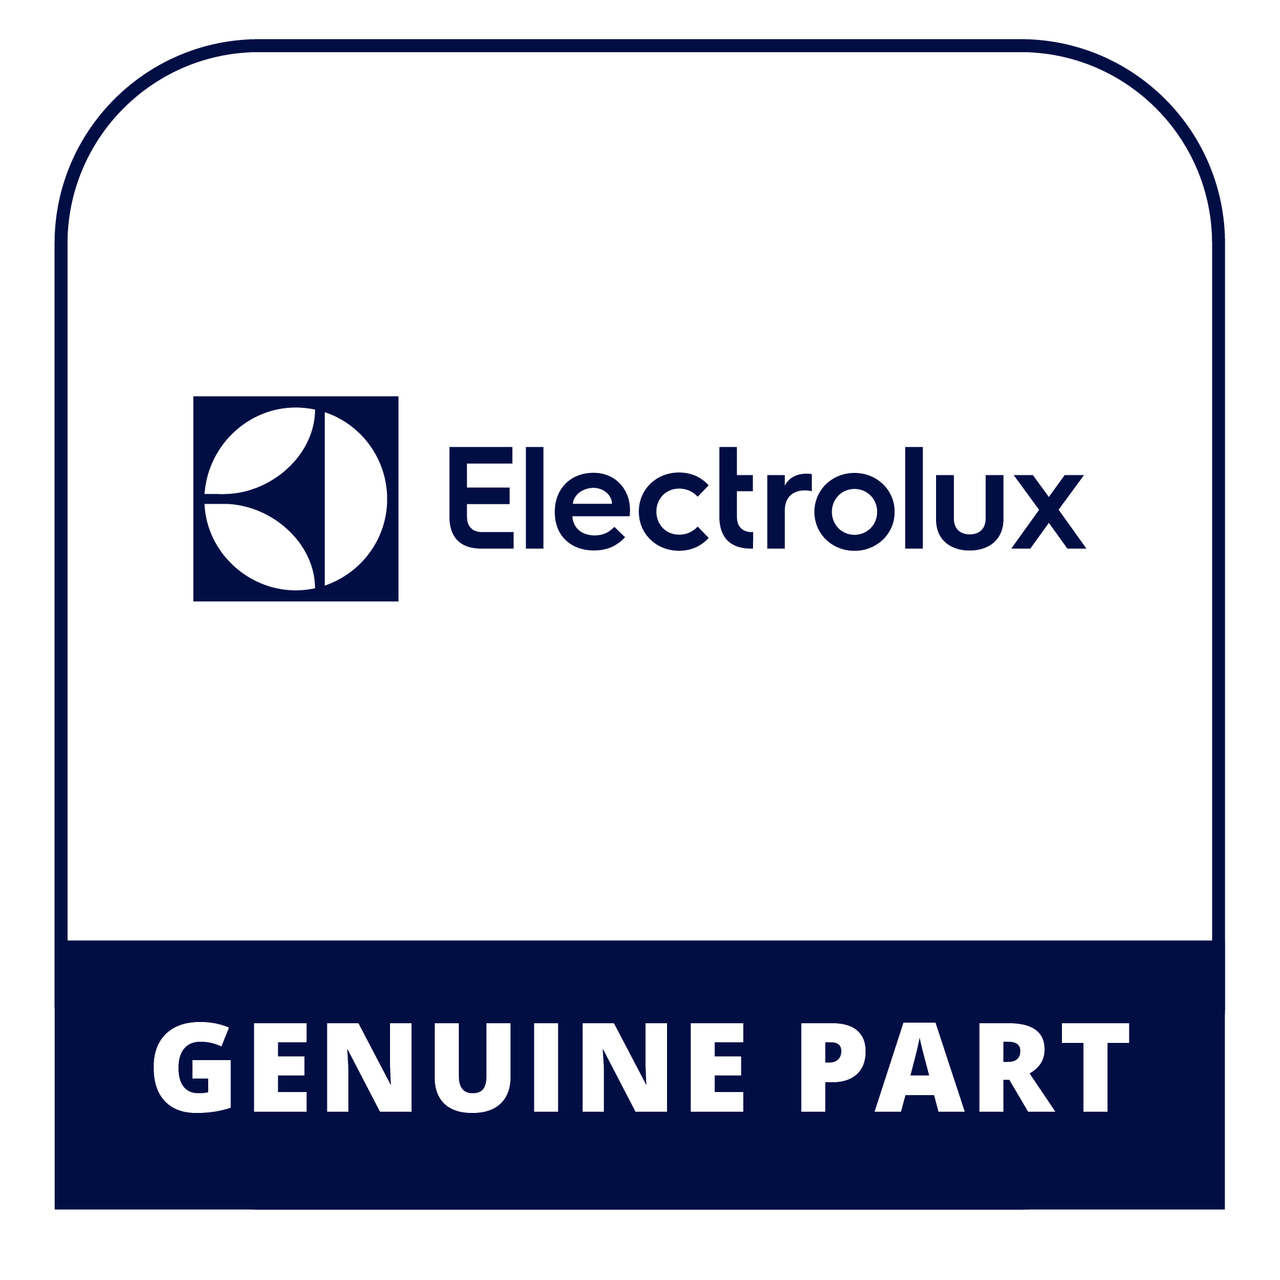 Frigidaire - Electrolux 240570241 Label-Module Cover - Genuine Electrolux Part